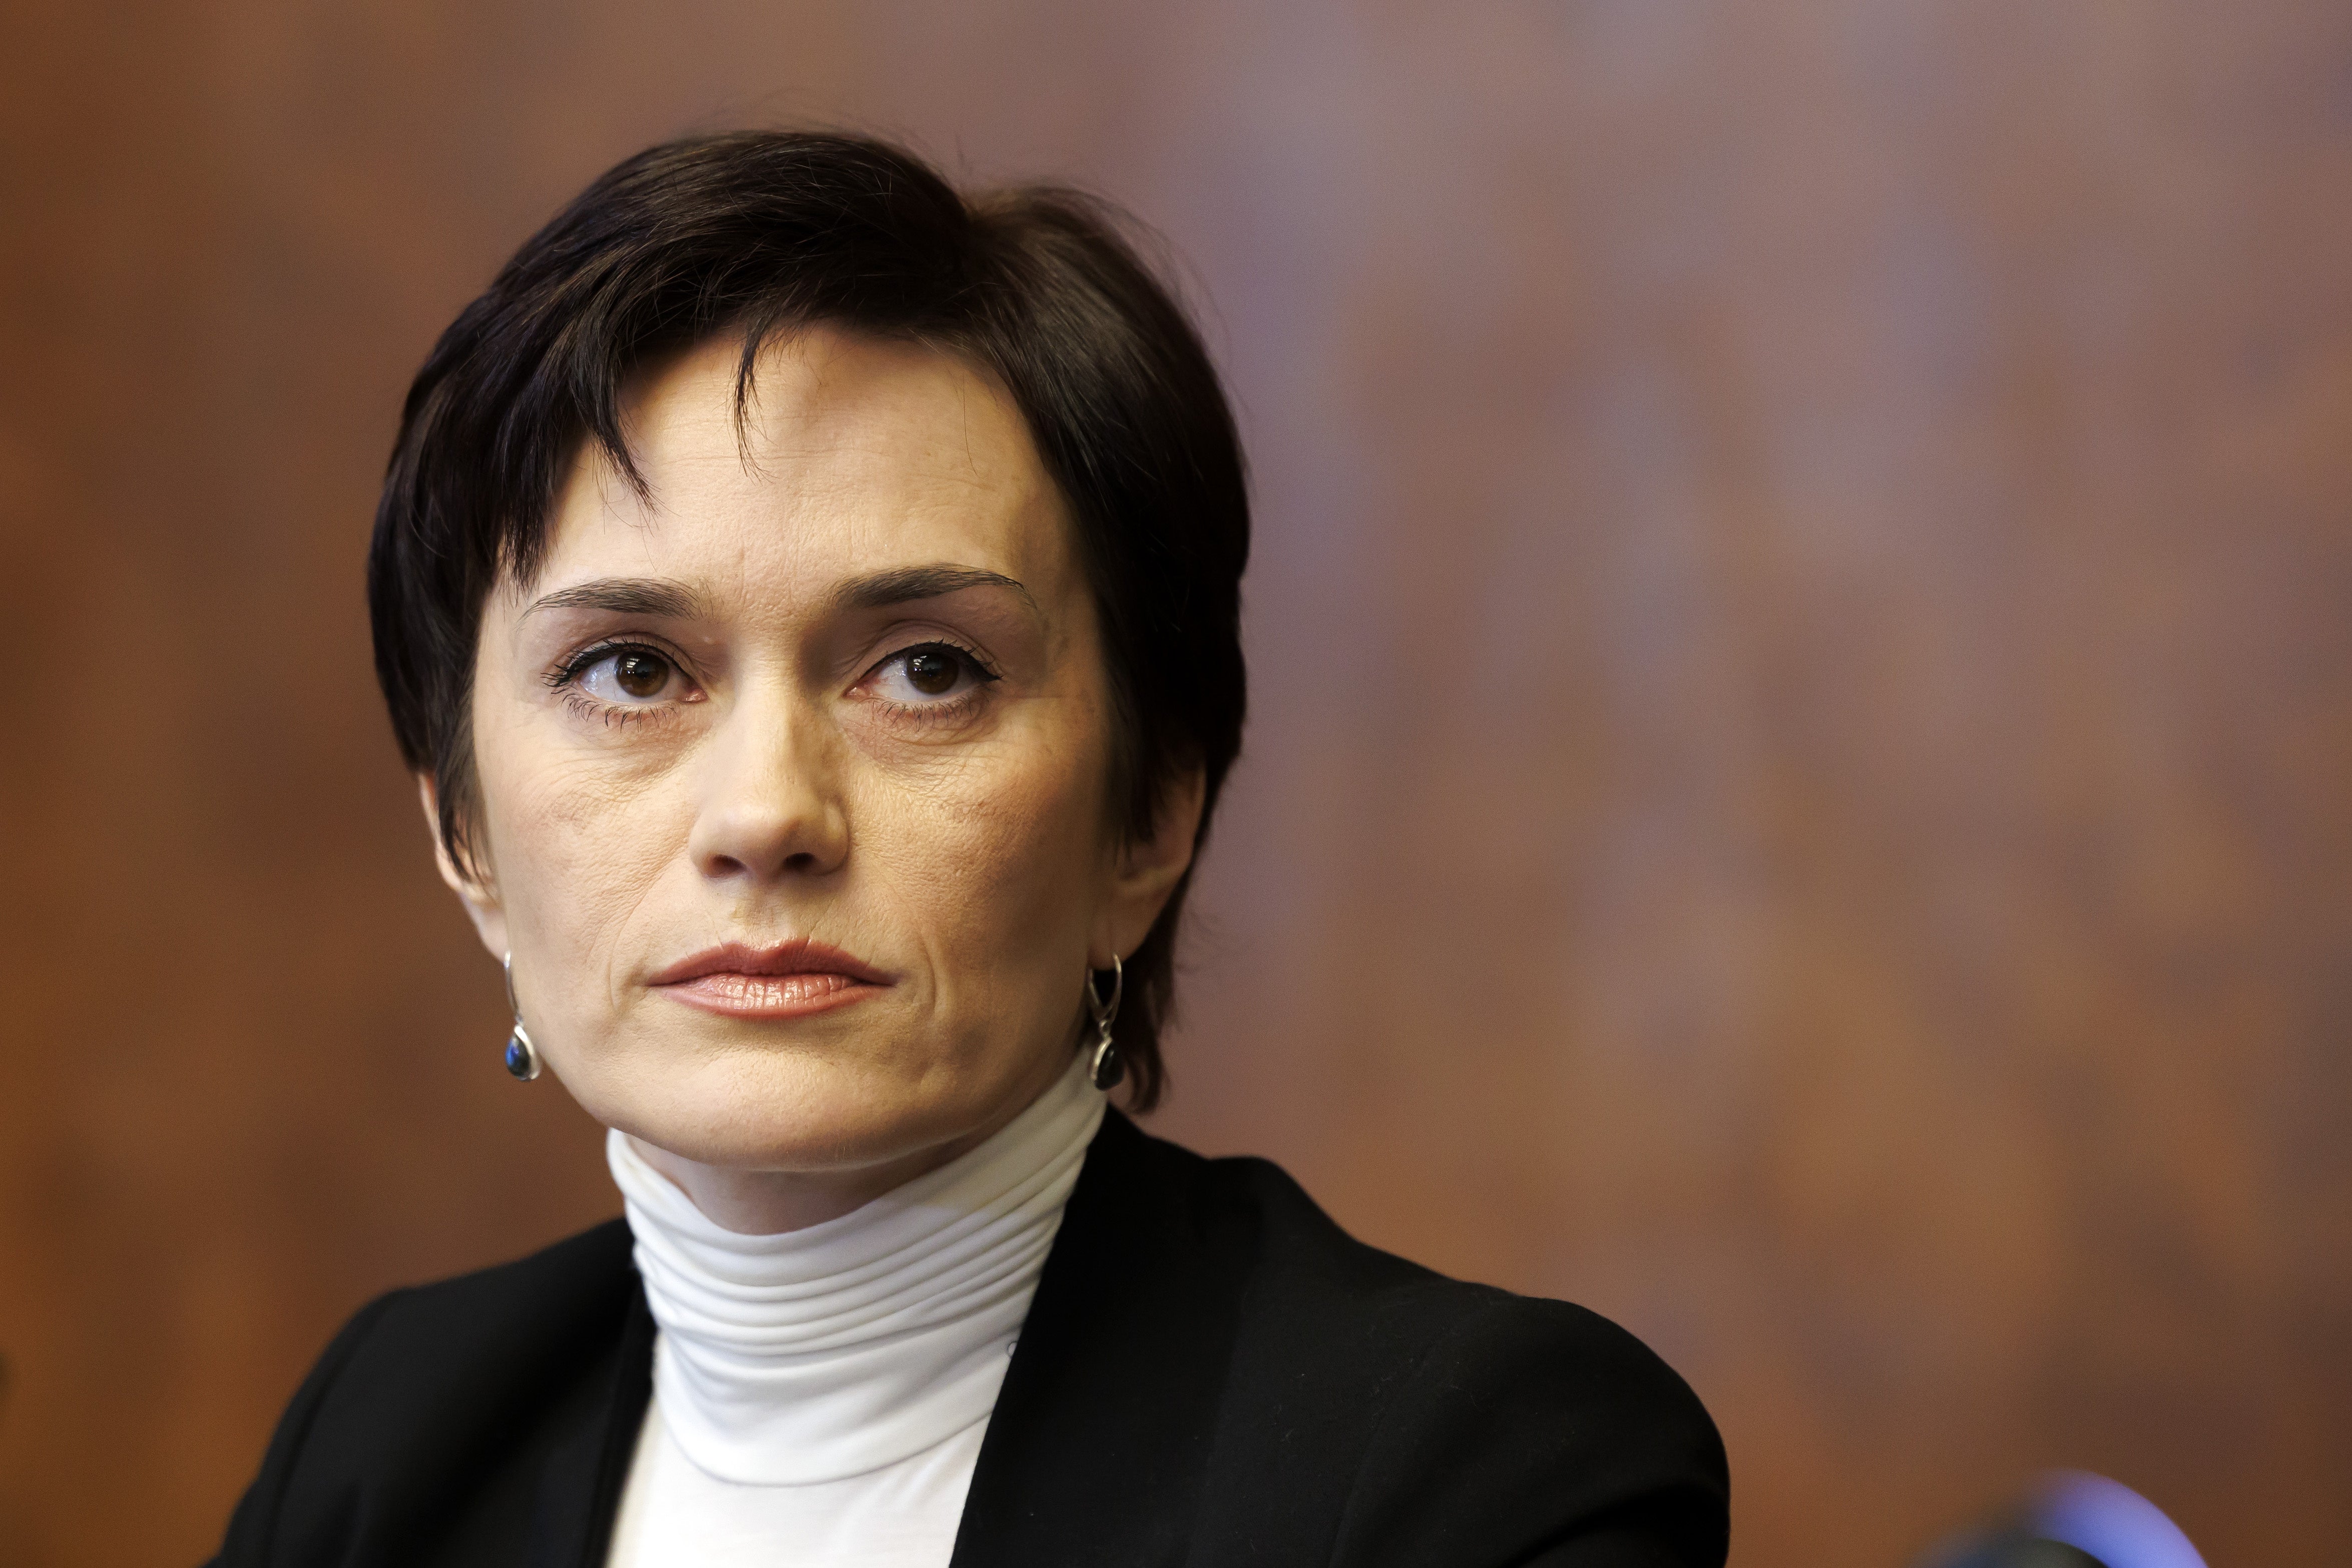 Evgenia Kara-Murza, human rights activist and wife of Vladimir